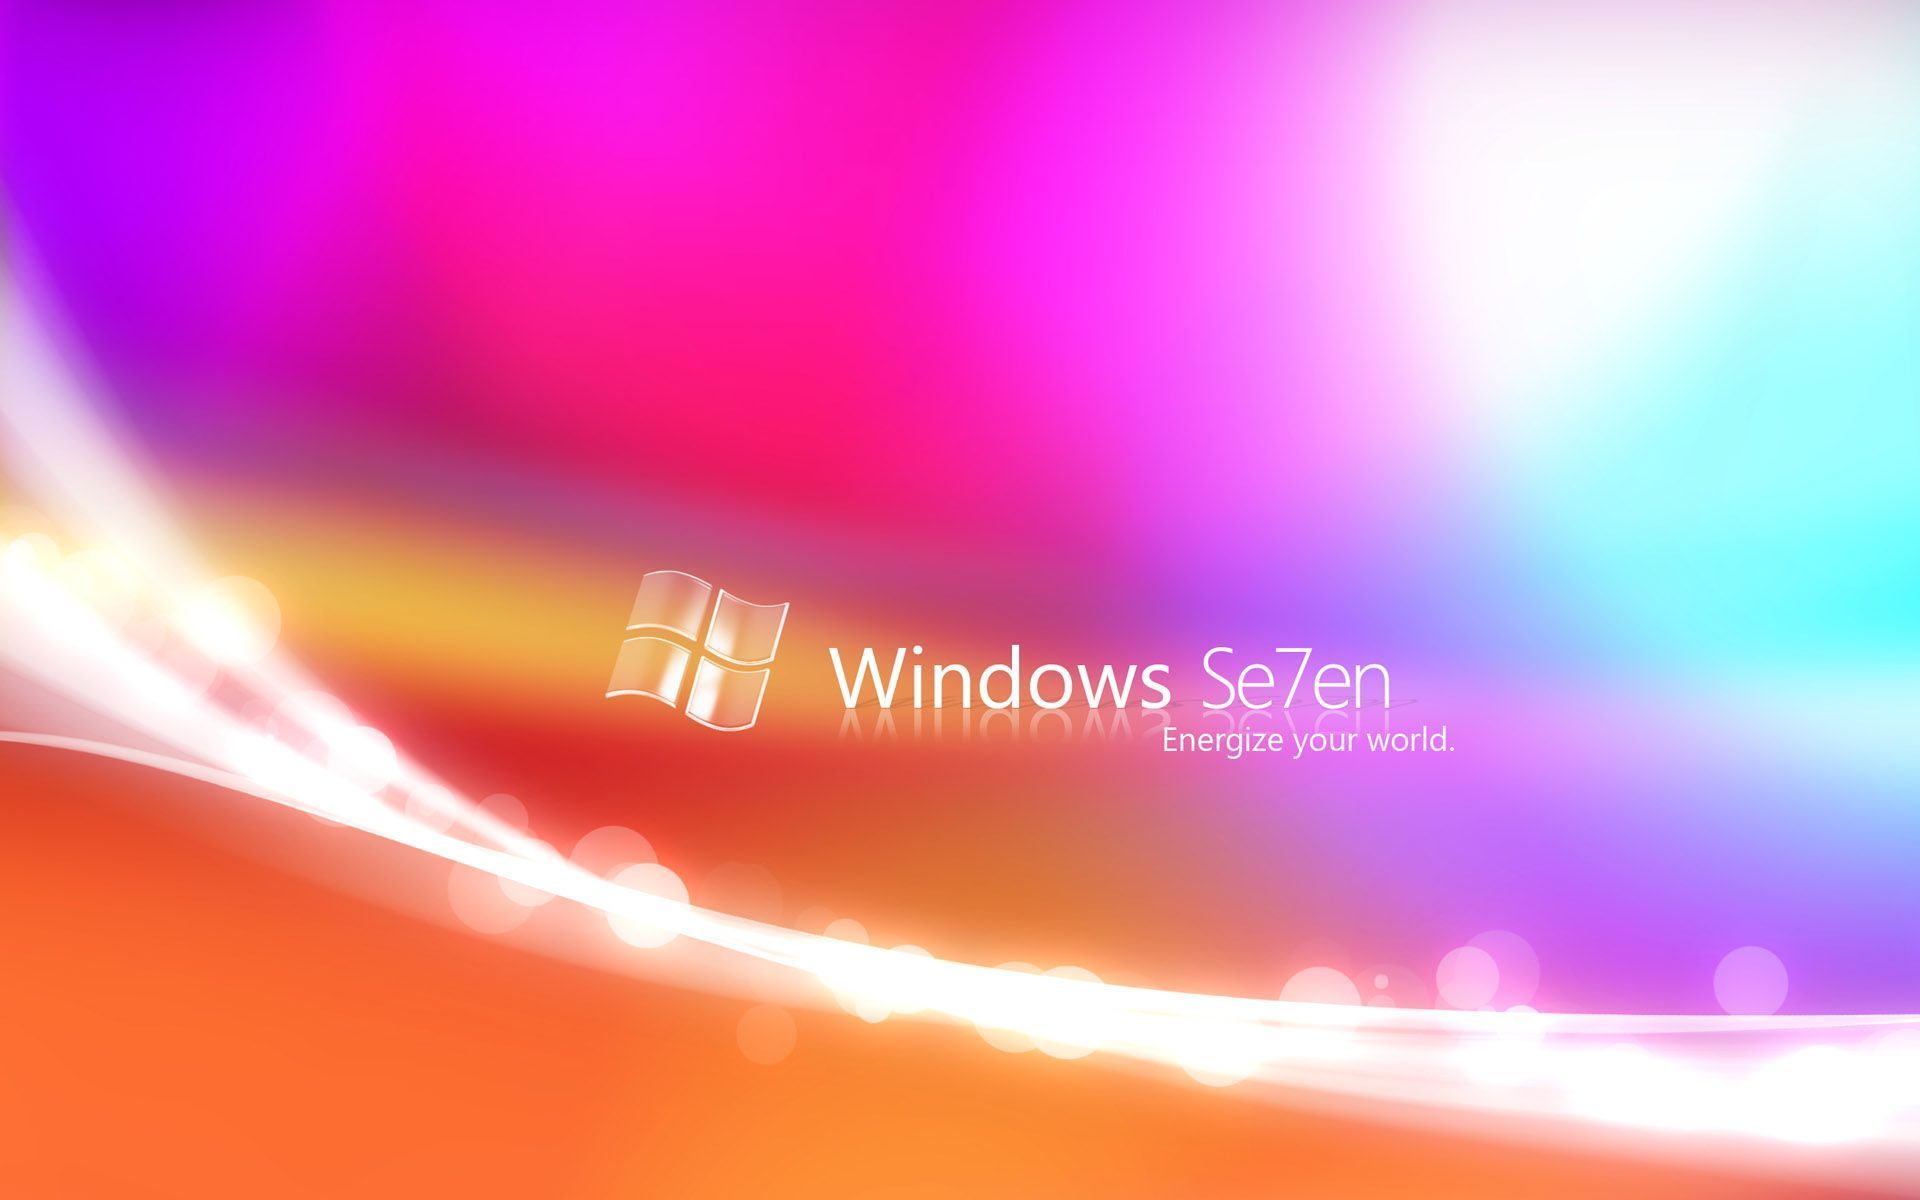 Windows 7 Original Wallpapers | HD Wallpapers